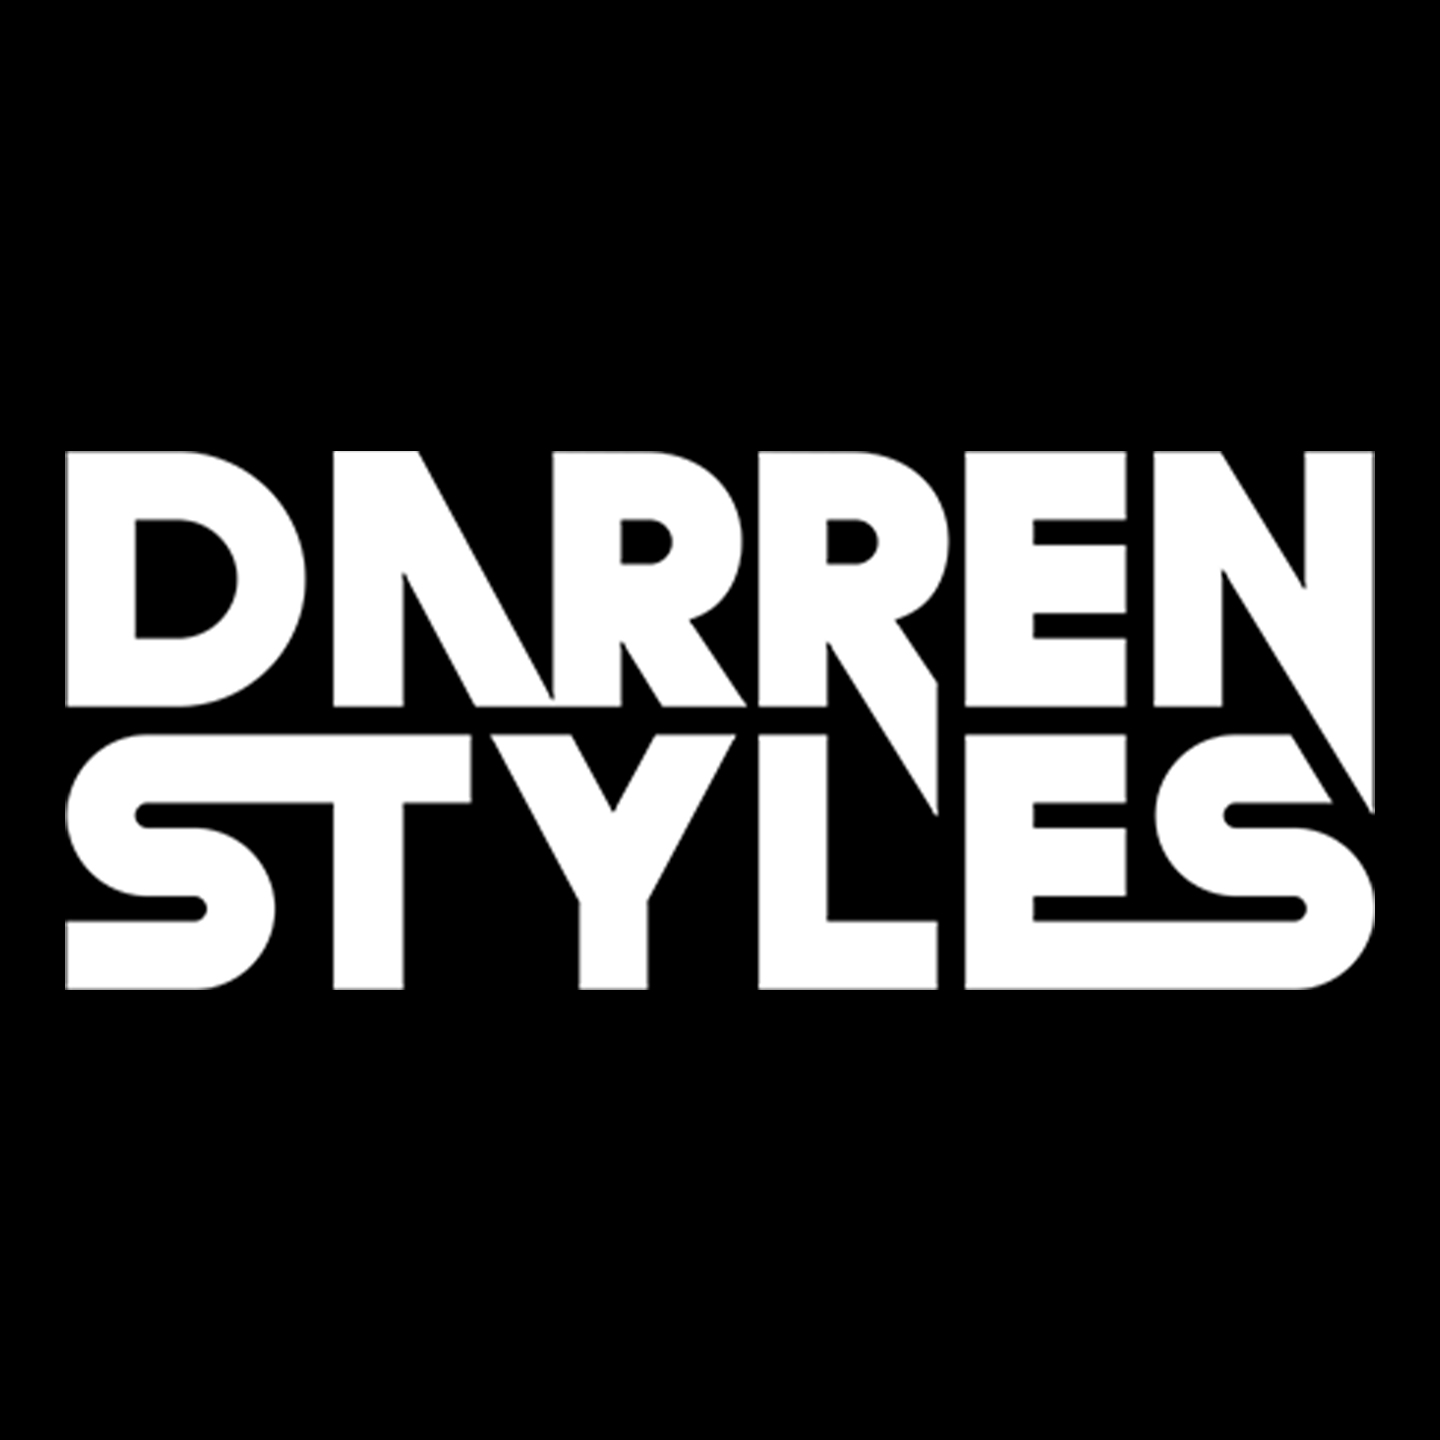 (c) Darrenstyles.co.uk